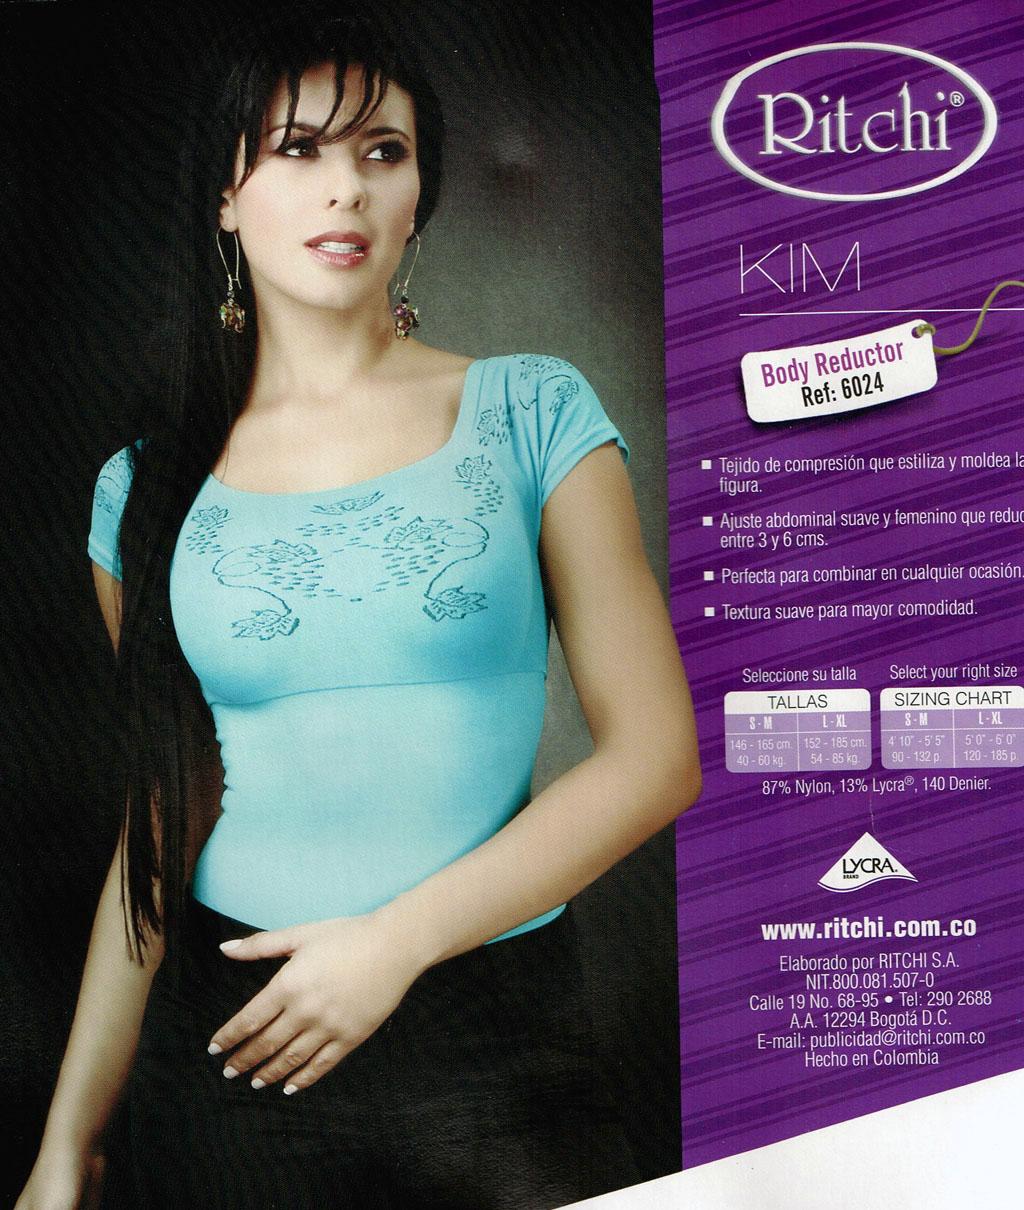 Comprar Body Ritchi online